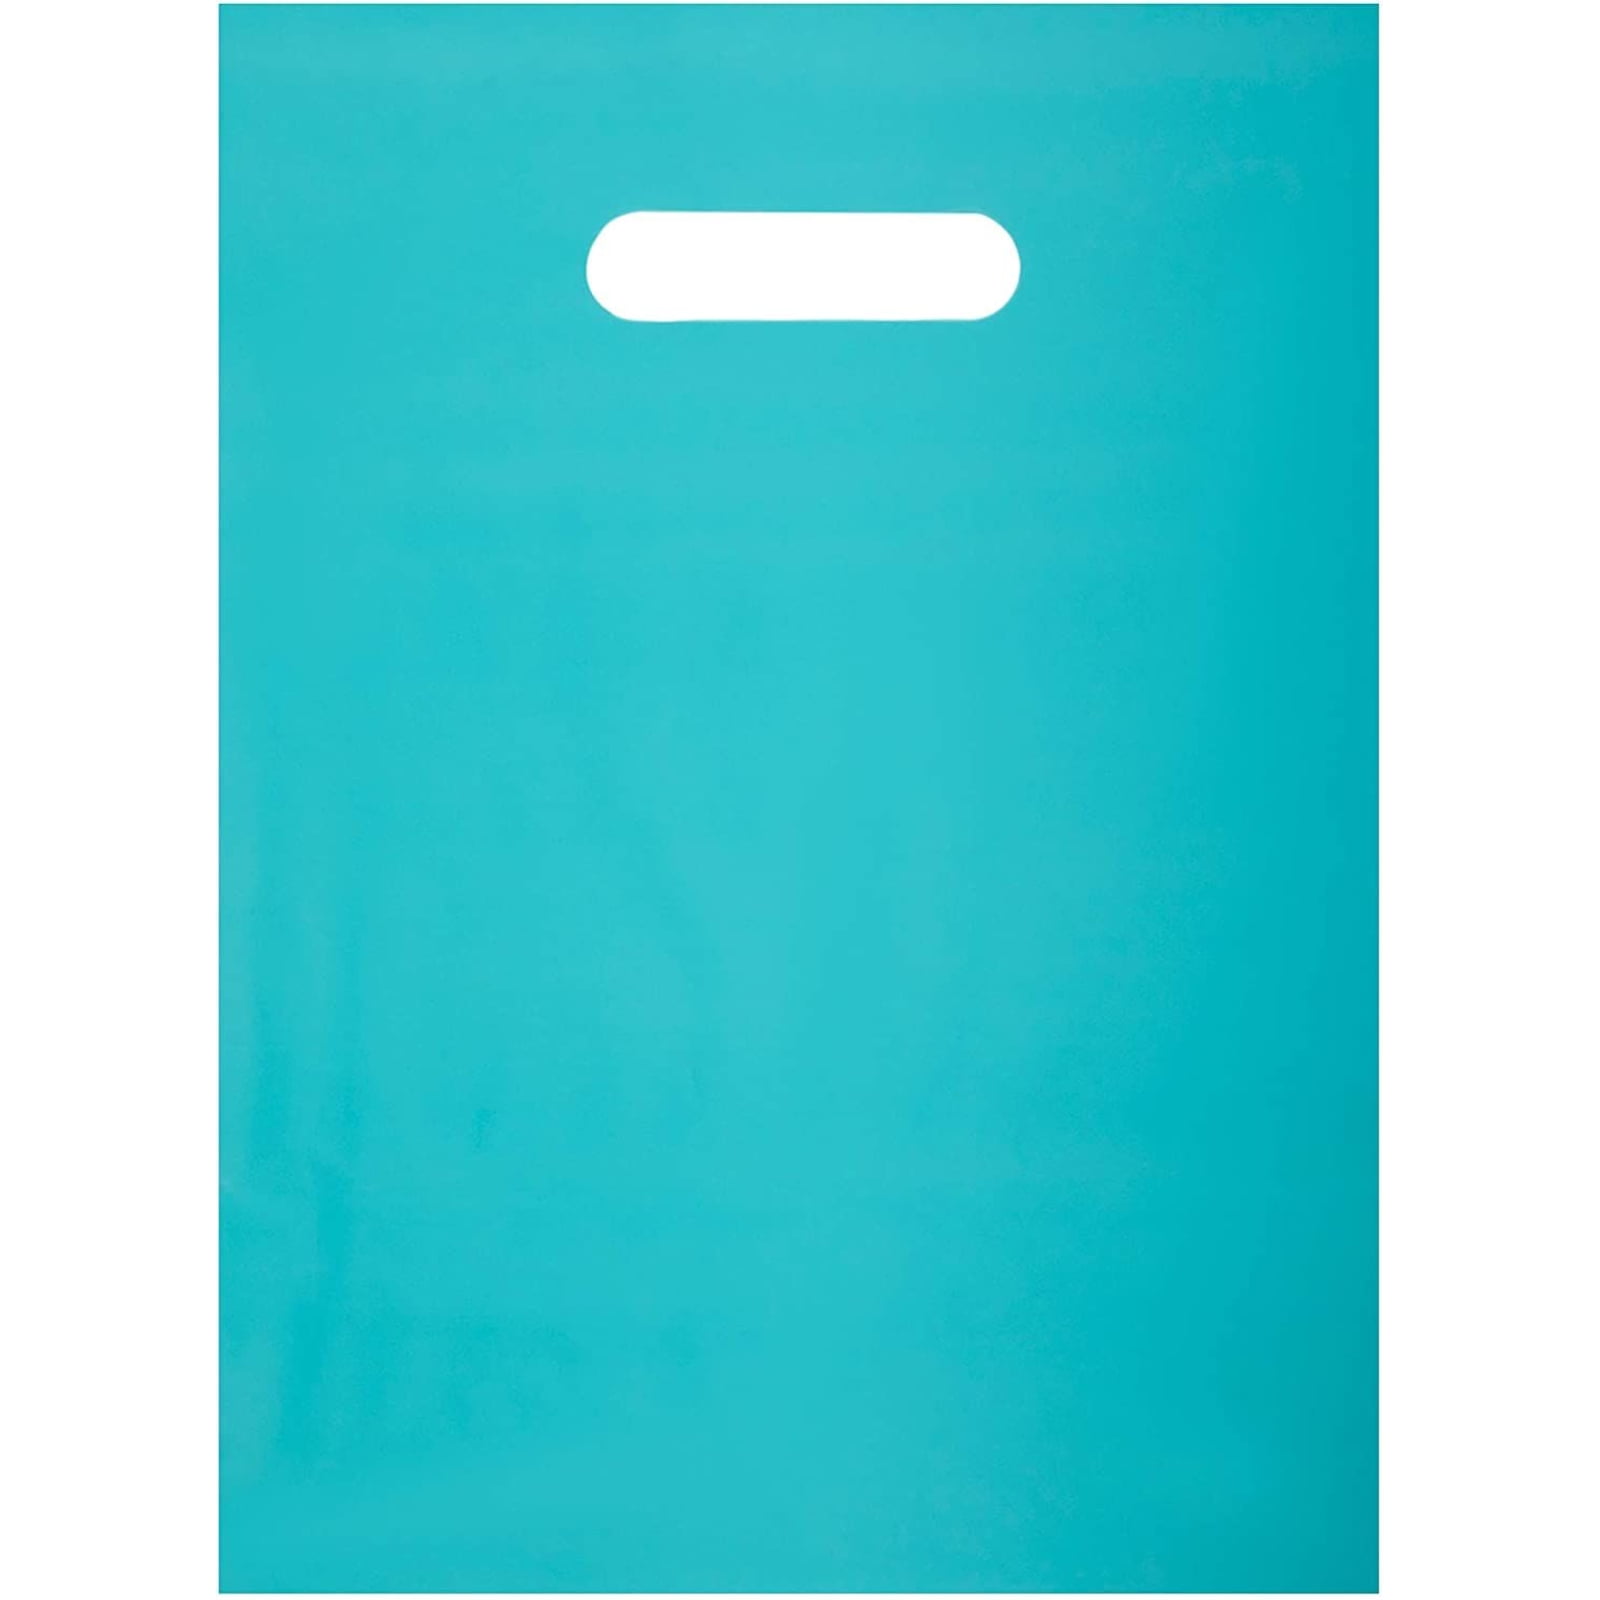 Pink，Blue 180 PCS Merchandise Bags,Plastic Retail Bags,Plastic Shopping Bags,Large Glossy Plastic Bags with Handles，12x15 inch,Purple 